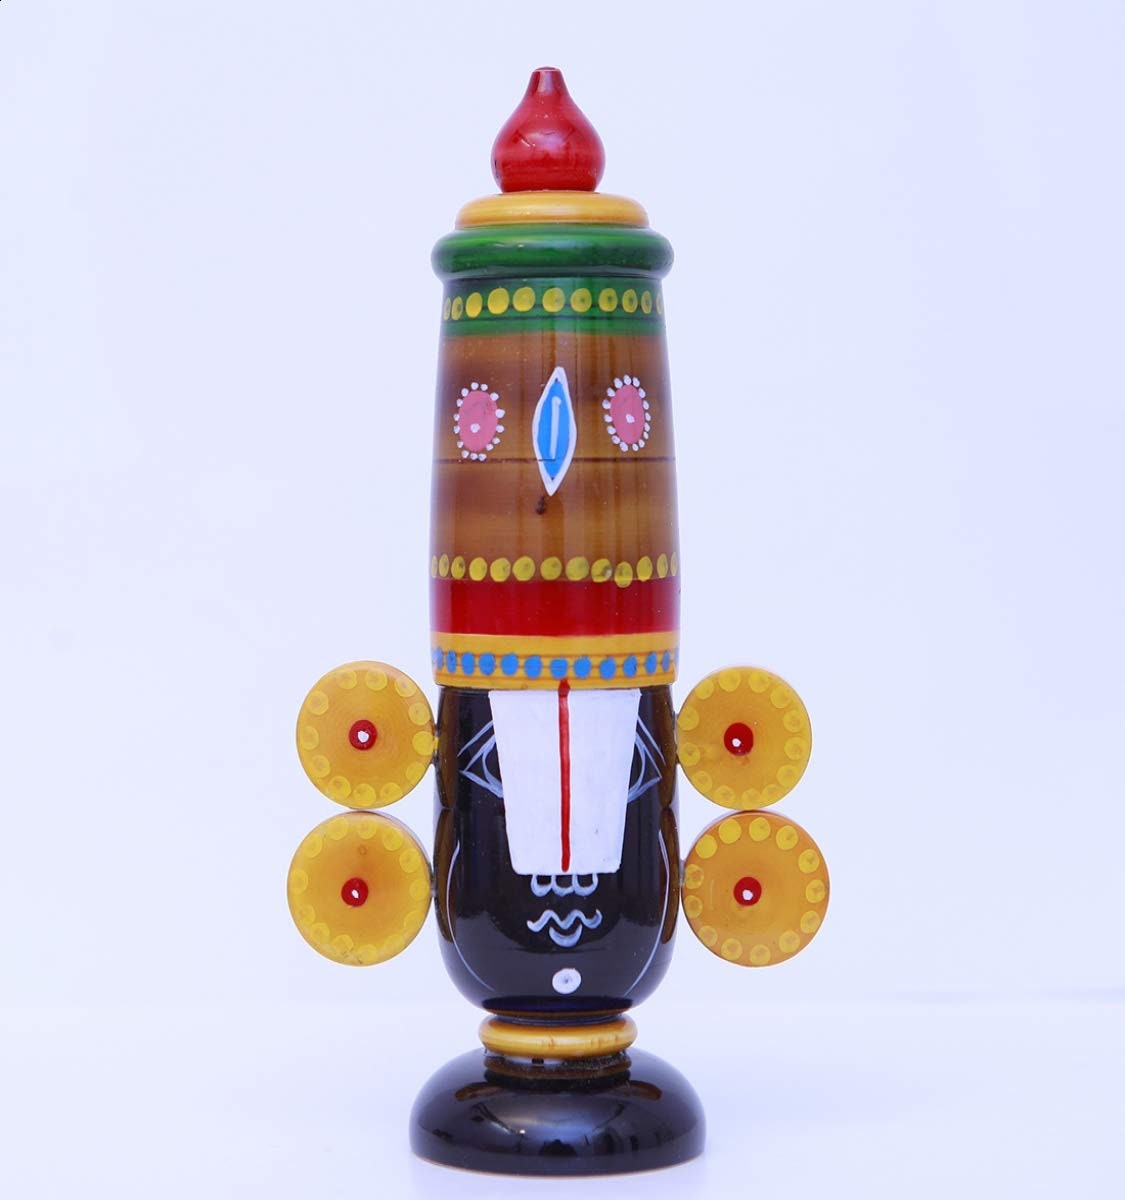 Handmade Colorful Lord Balaji Sculpture, House-warming Gift